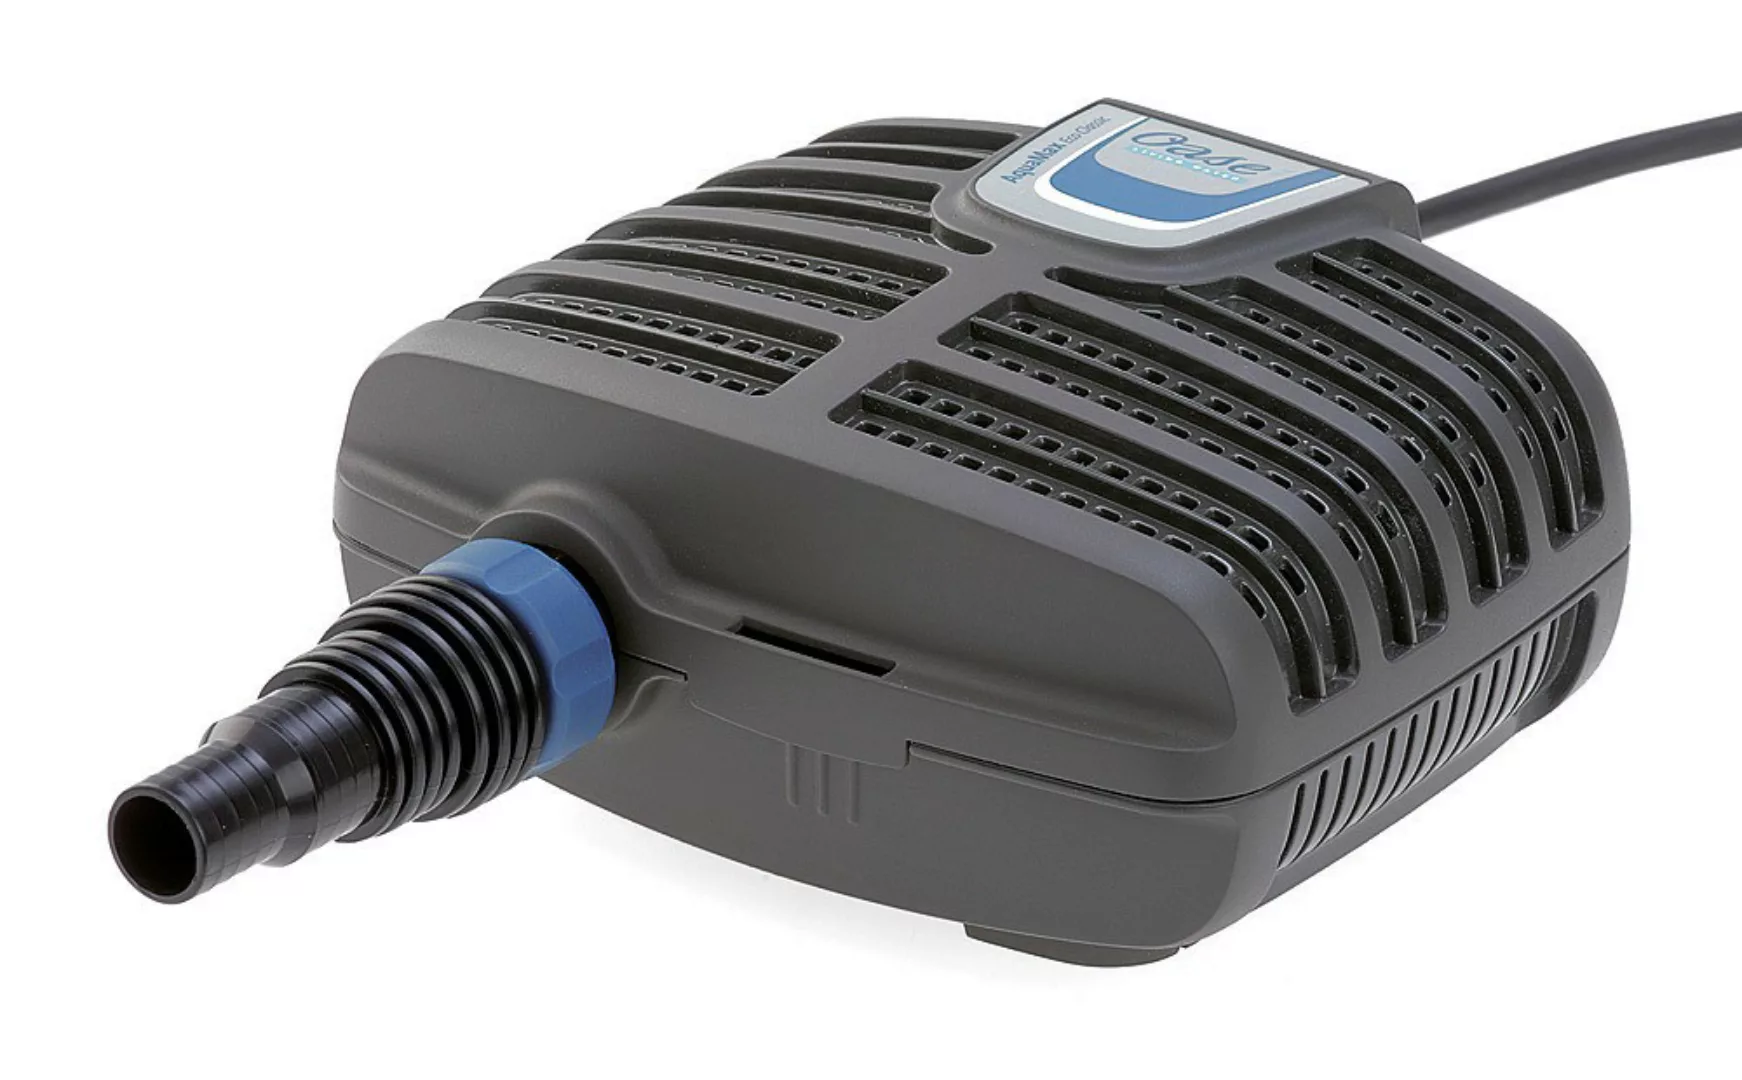 Oase AquaMax Eco Classic 17500 Teichpumpe Filterpumpe günstig online kaufen